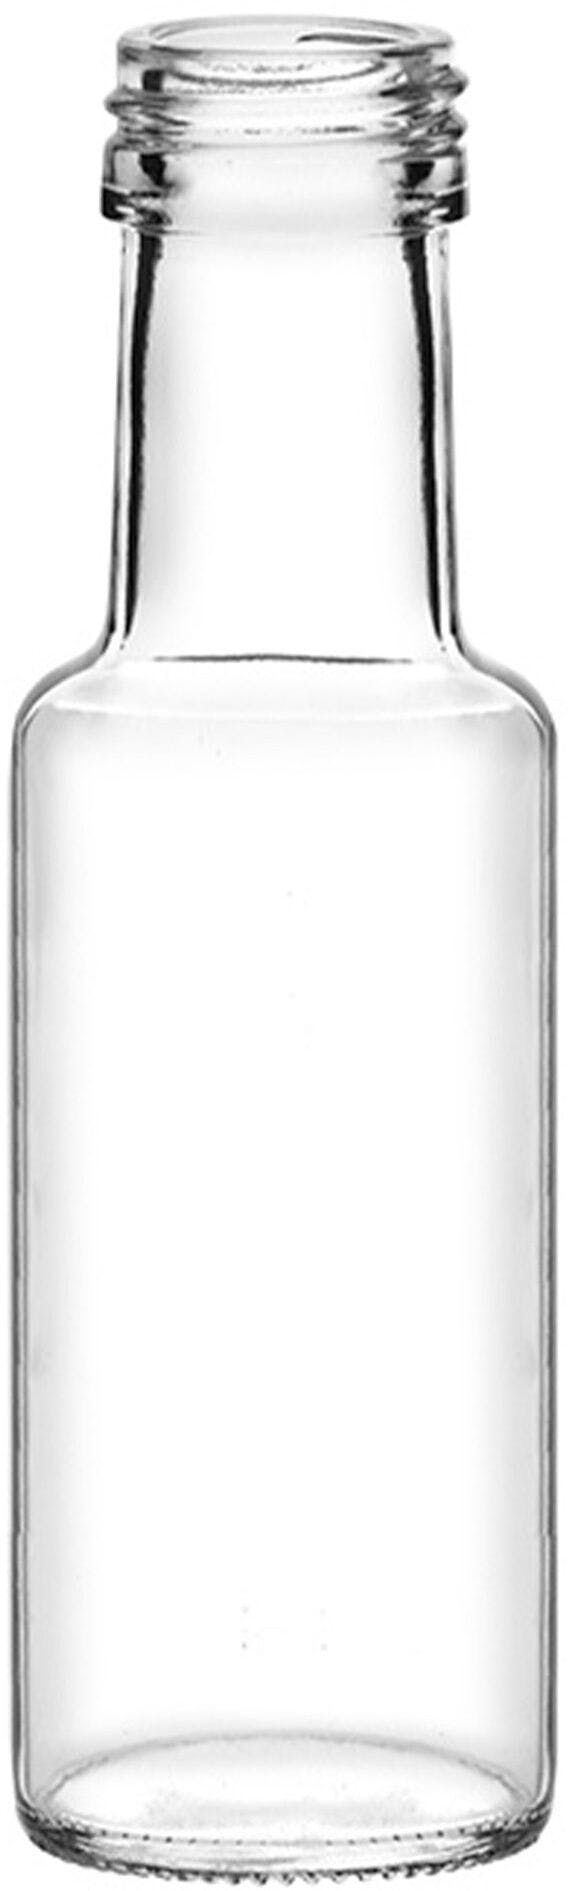 Bottle DORICA 125 P 31,5 X 18